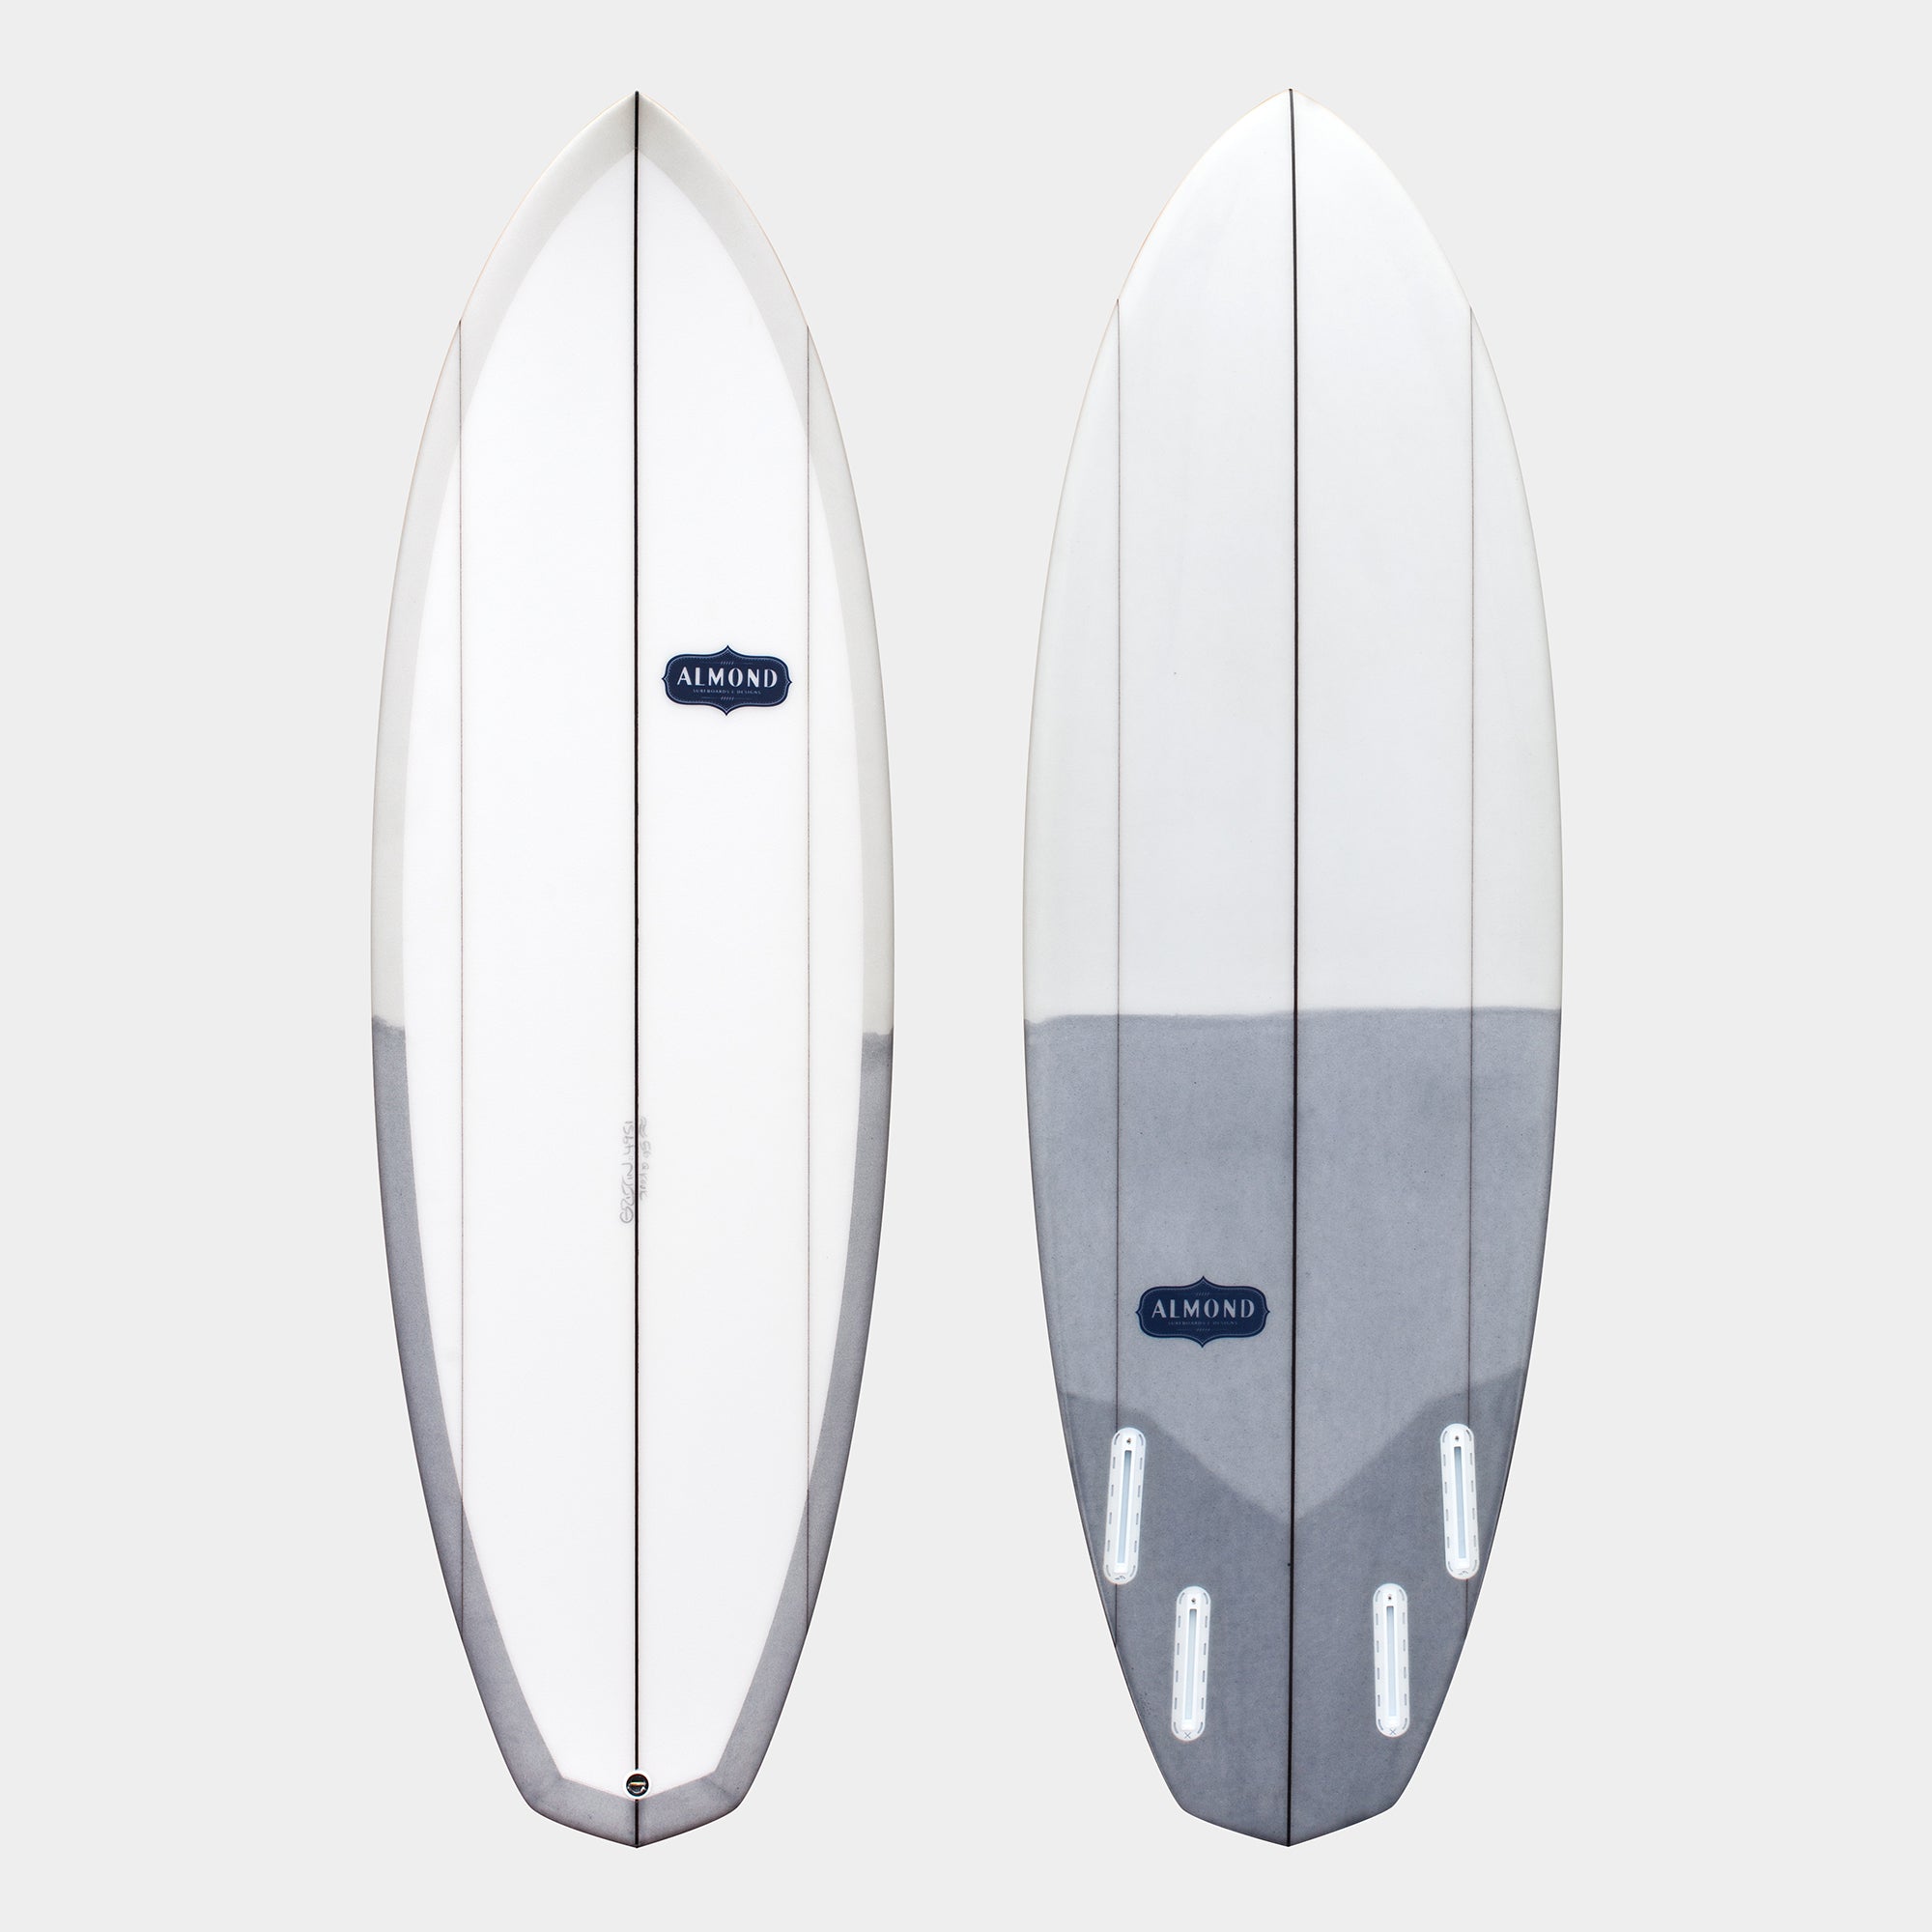 Almond surfboards 5'6